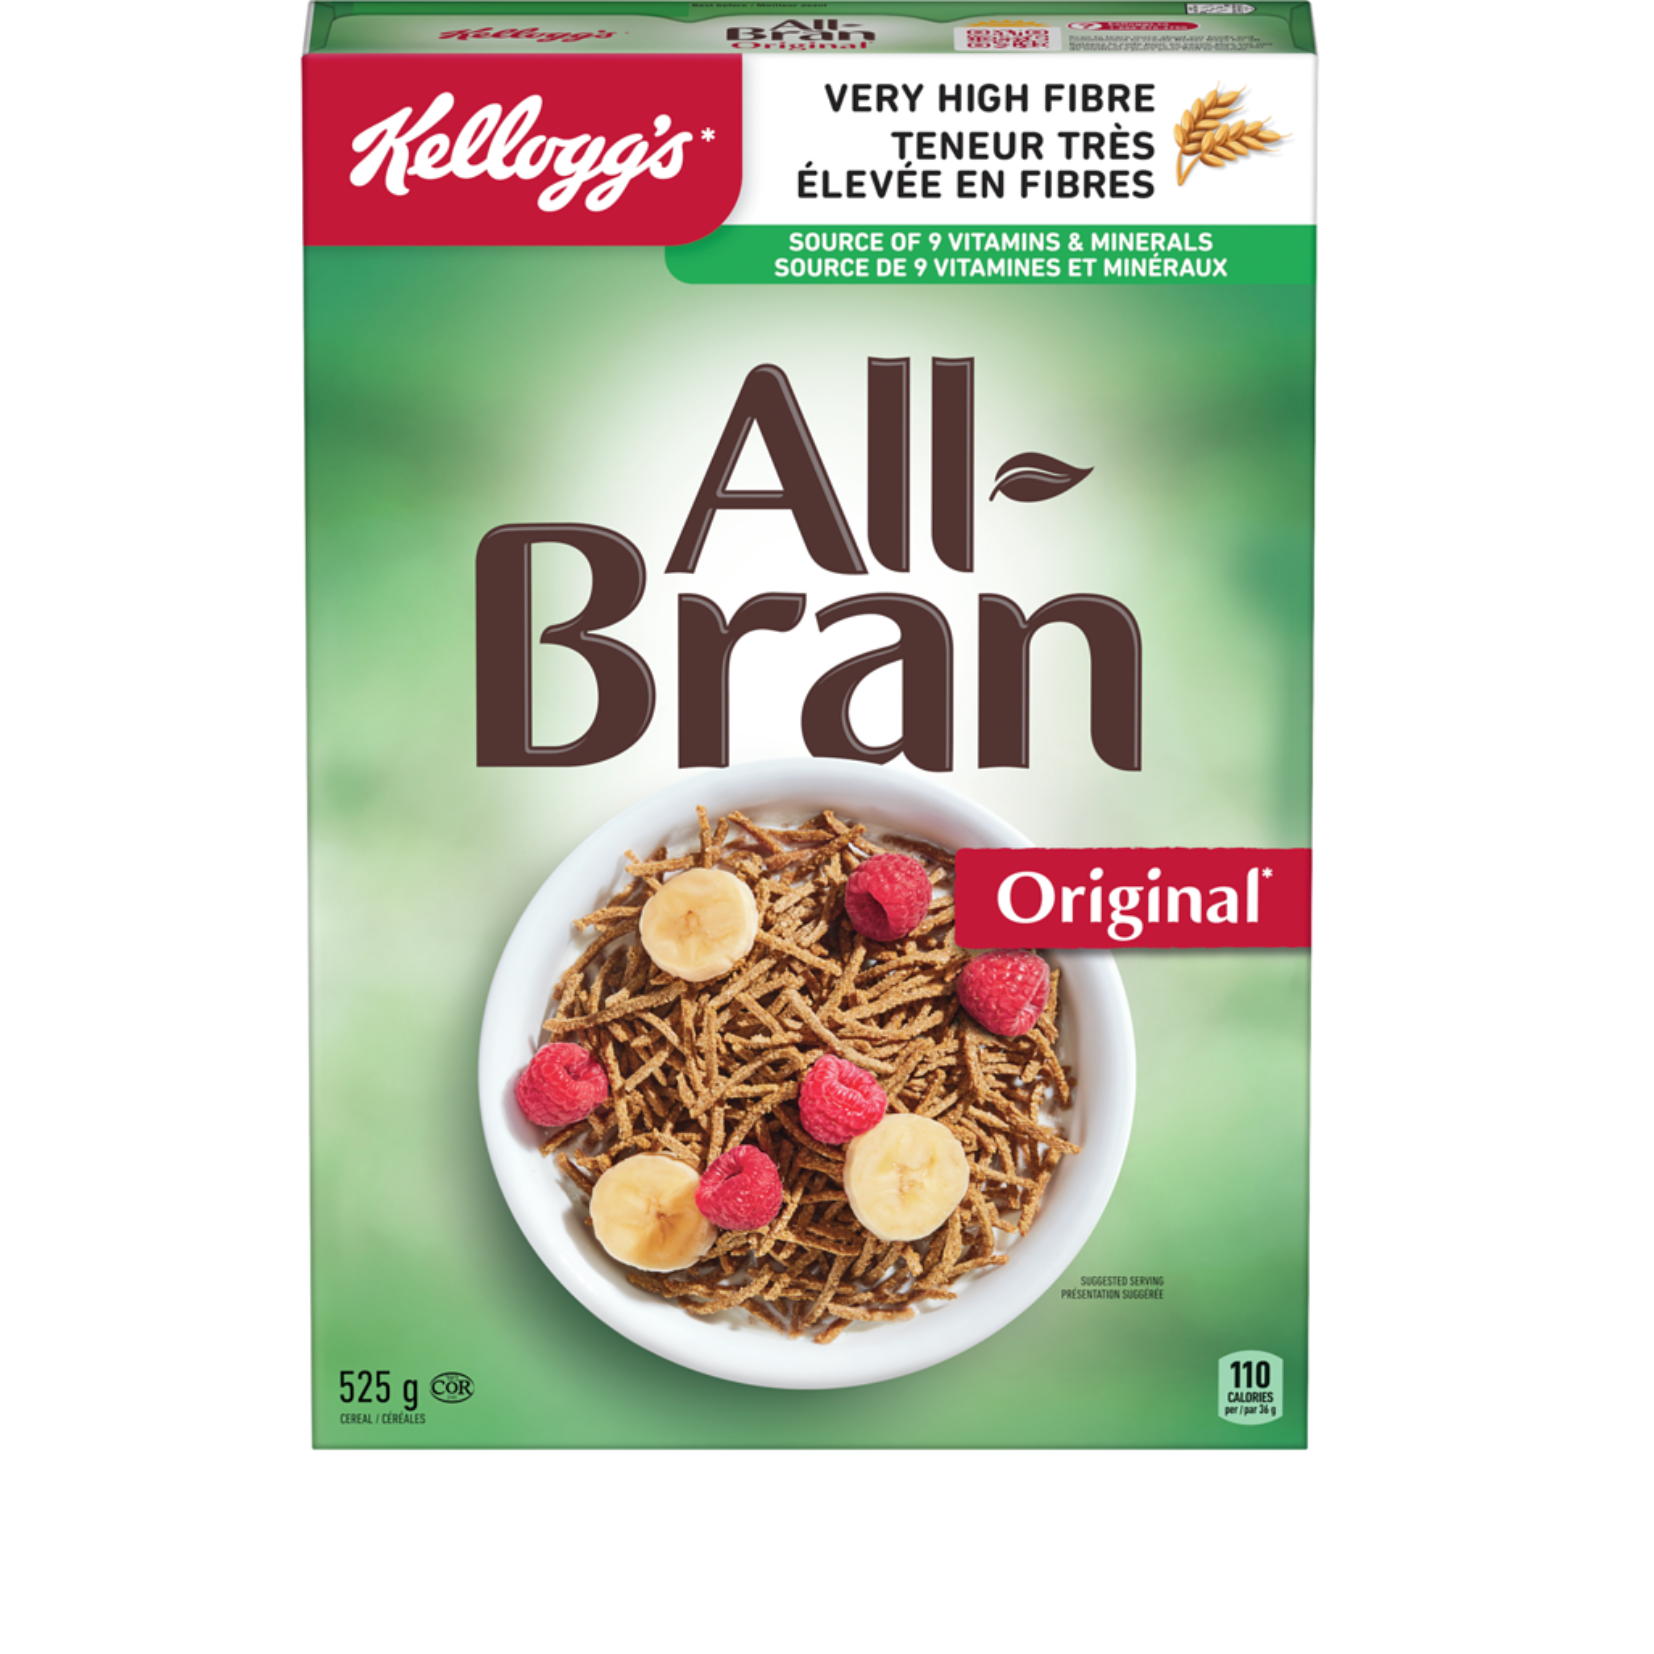 Kellogg's All Bran Original Cereal 525g